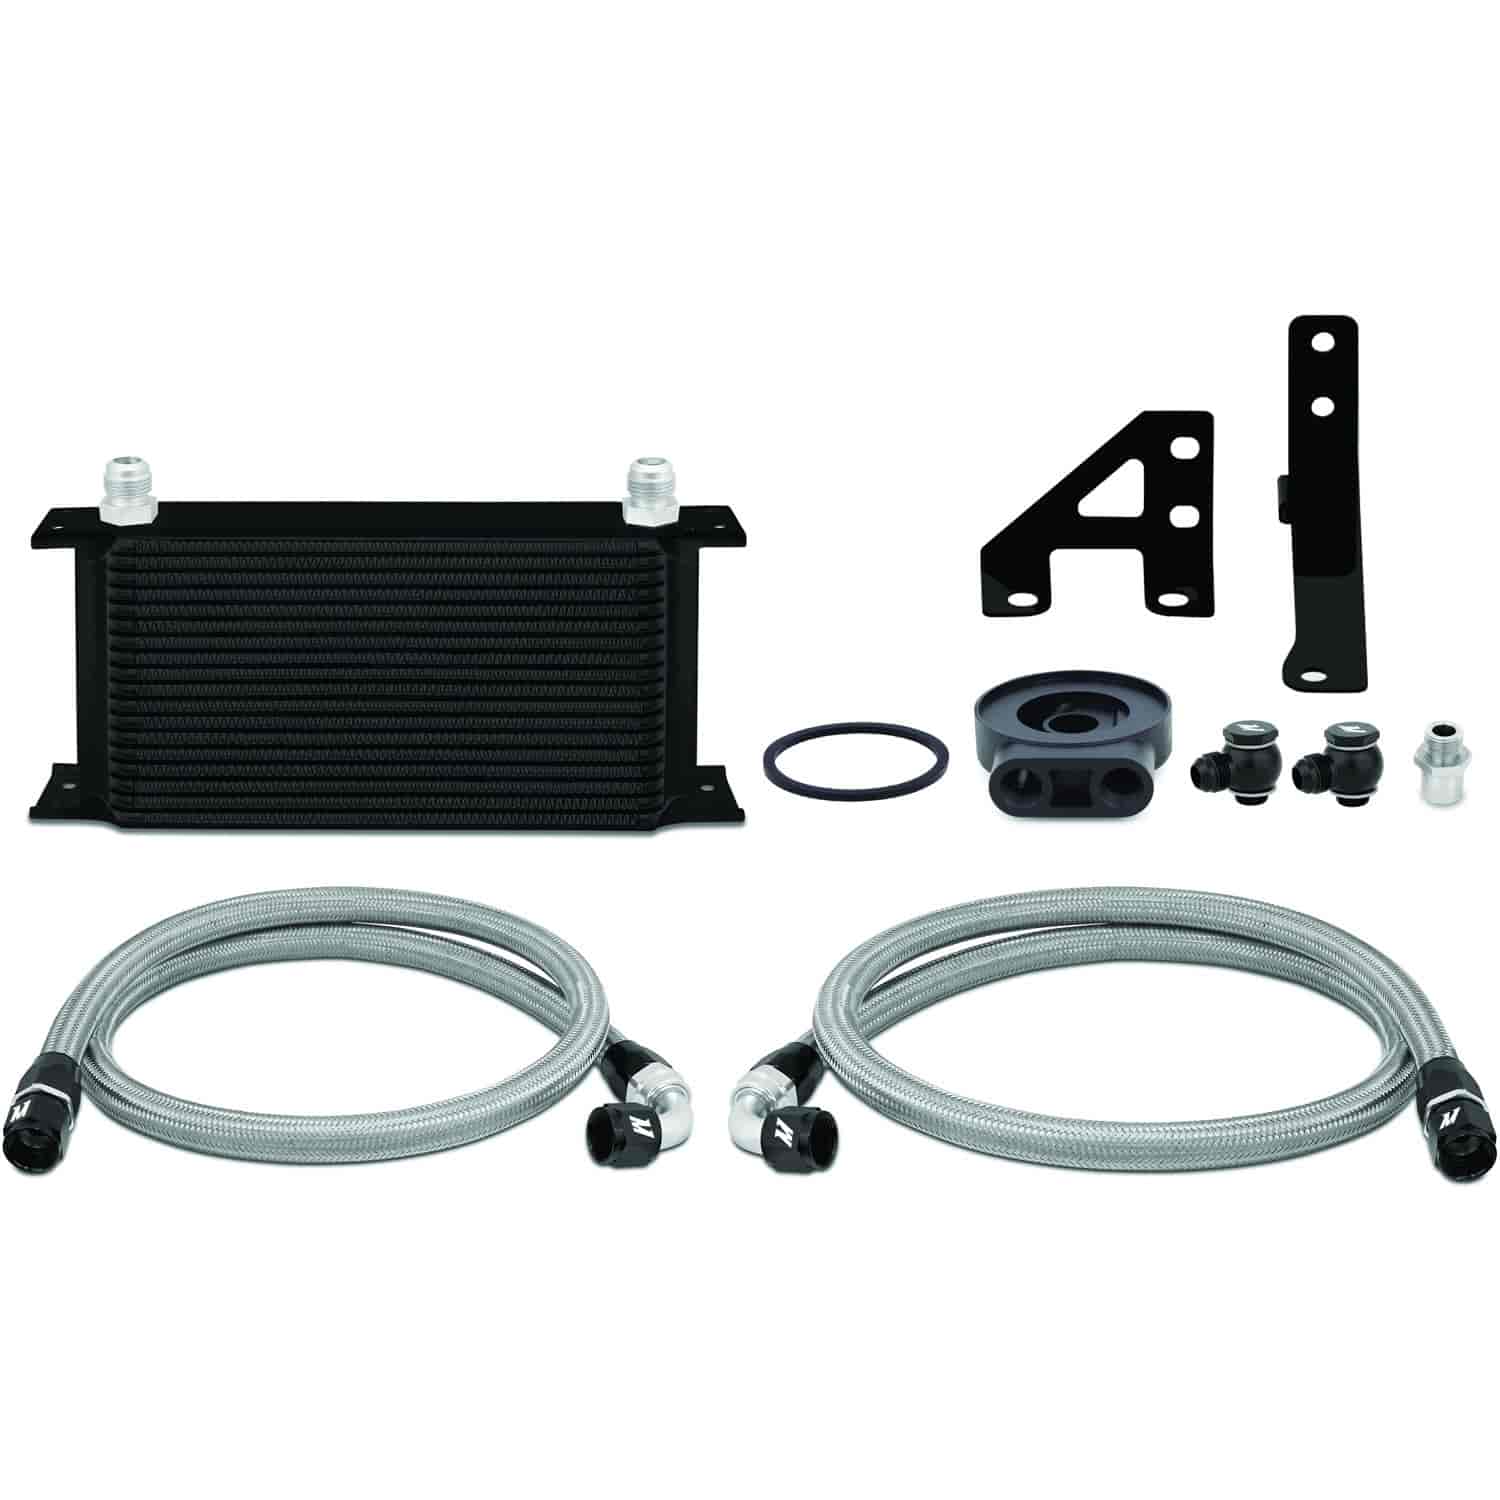 Subaru WRX Oil Cooler Kit - MFG Part No. MMOC-WRX-15BK